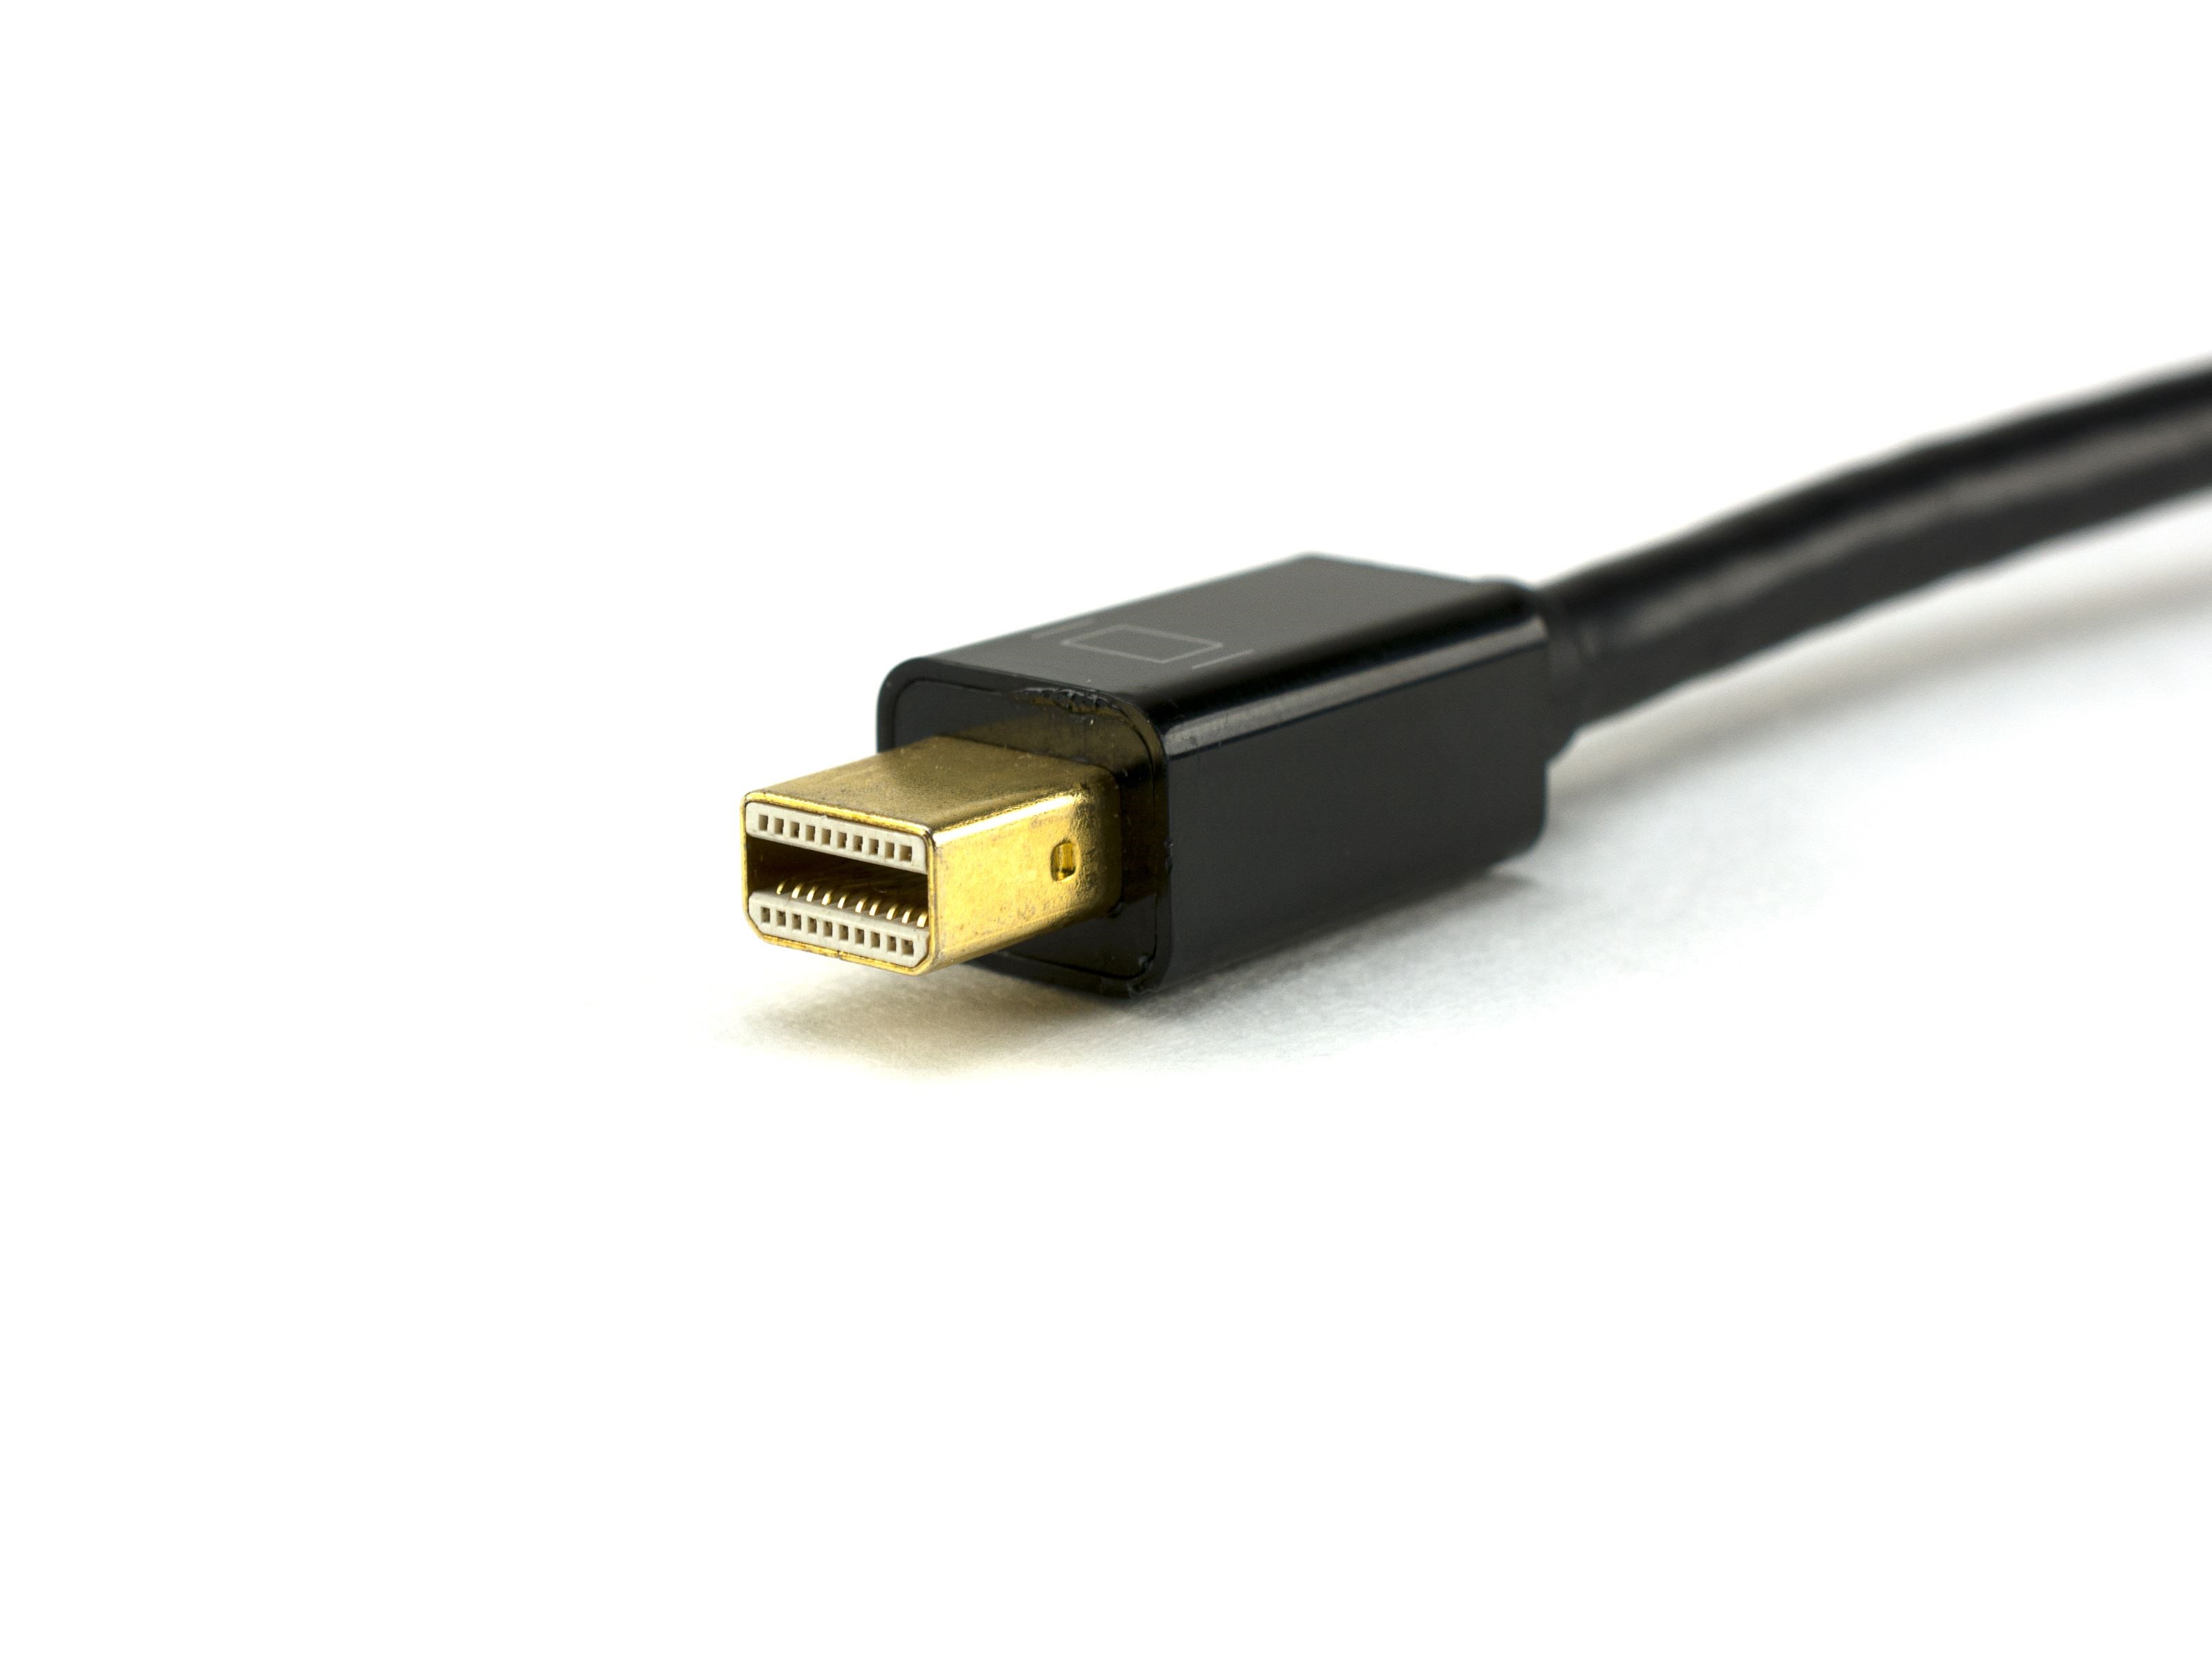 Vivid AV Mini DisplayPort to Hdmi, Dvi, or VGA Audio/Video Adapter